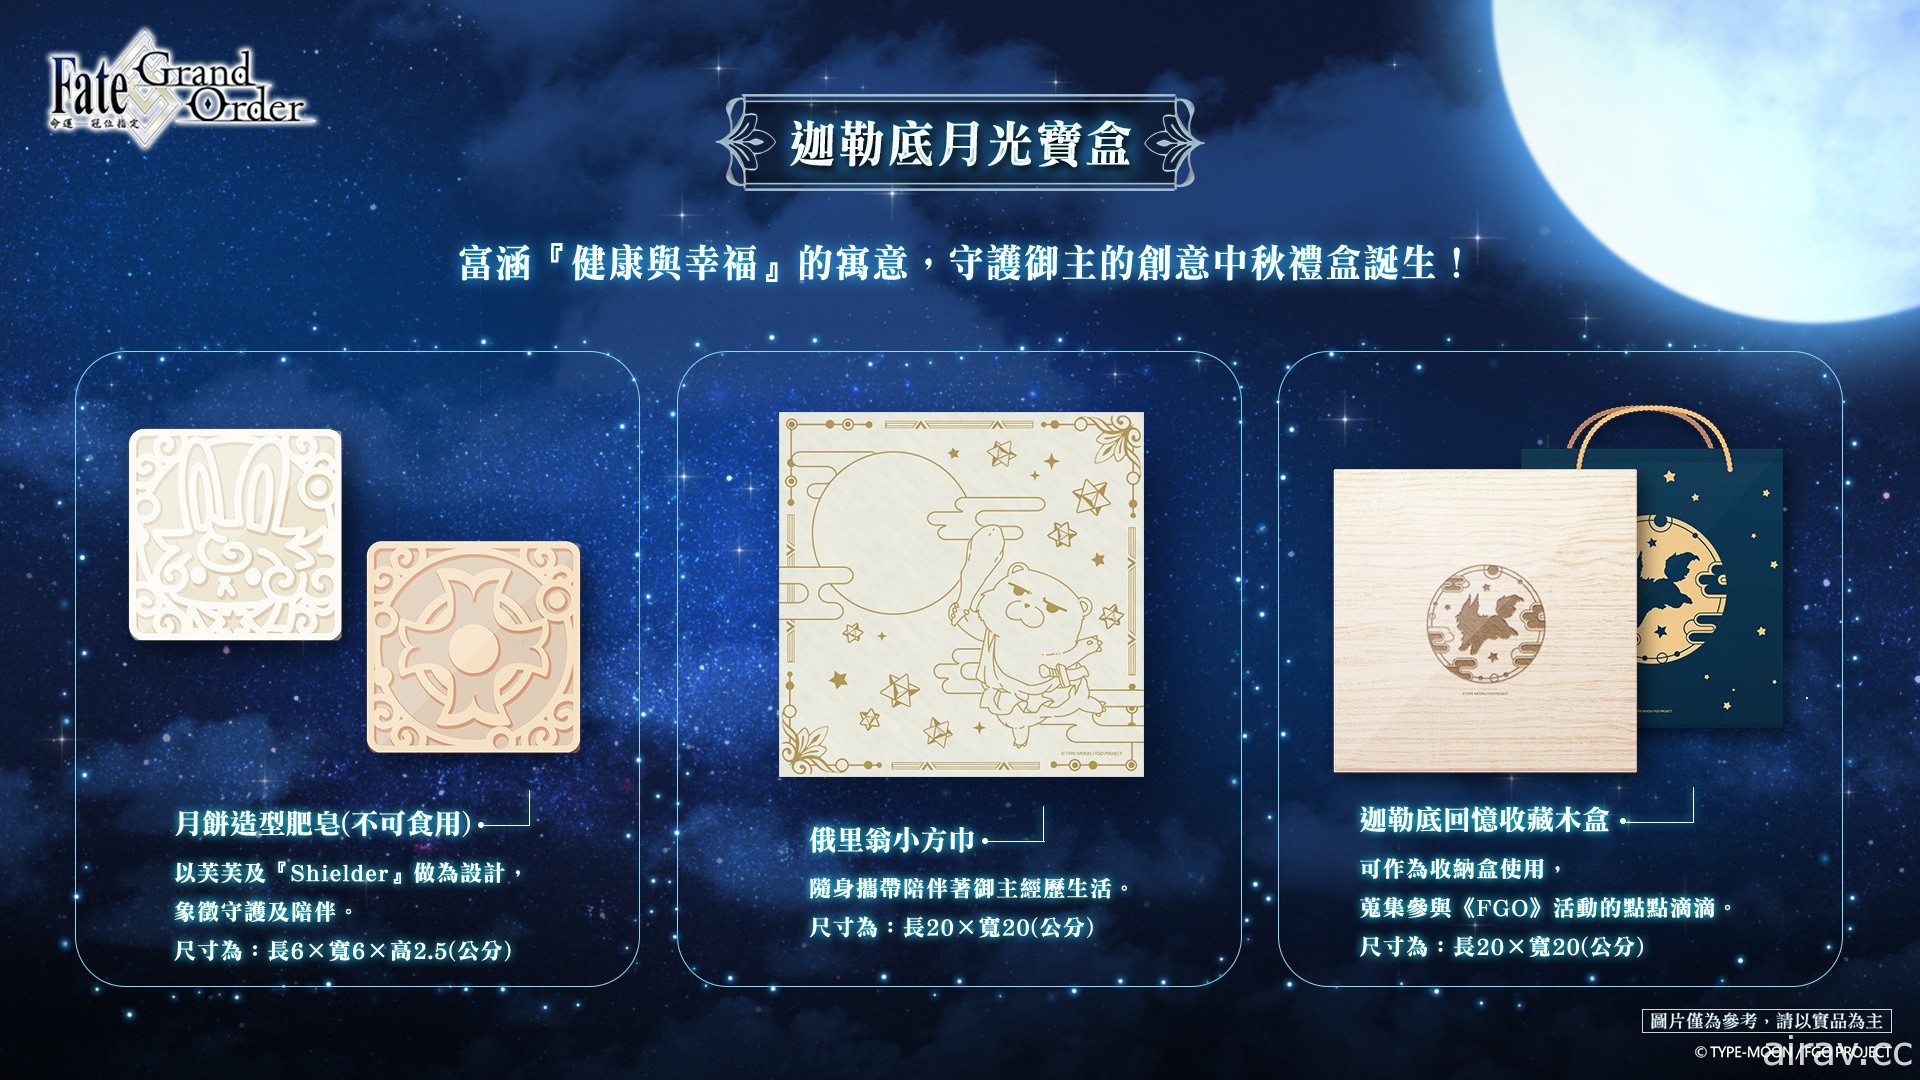 《Fate/Grand Order》繁中版將於 9 月 21 日舉辦迦勒底中秋節紀念活動